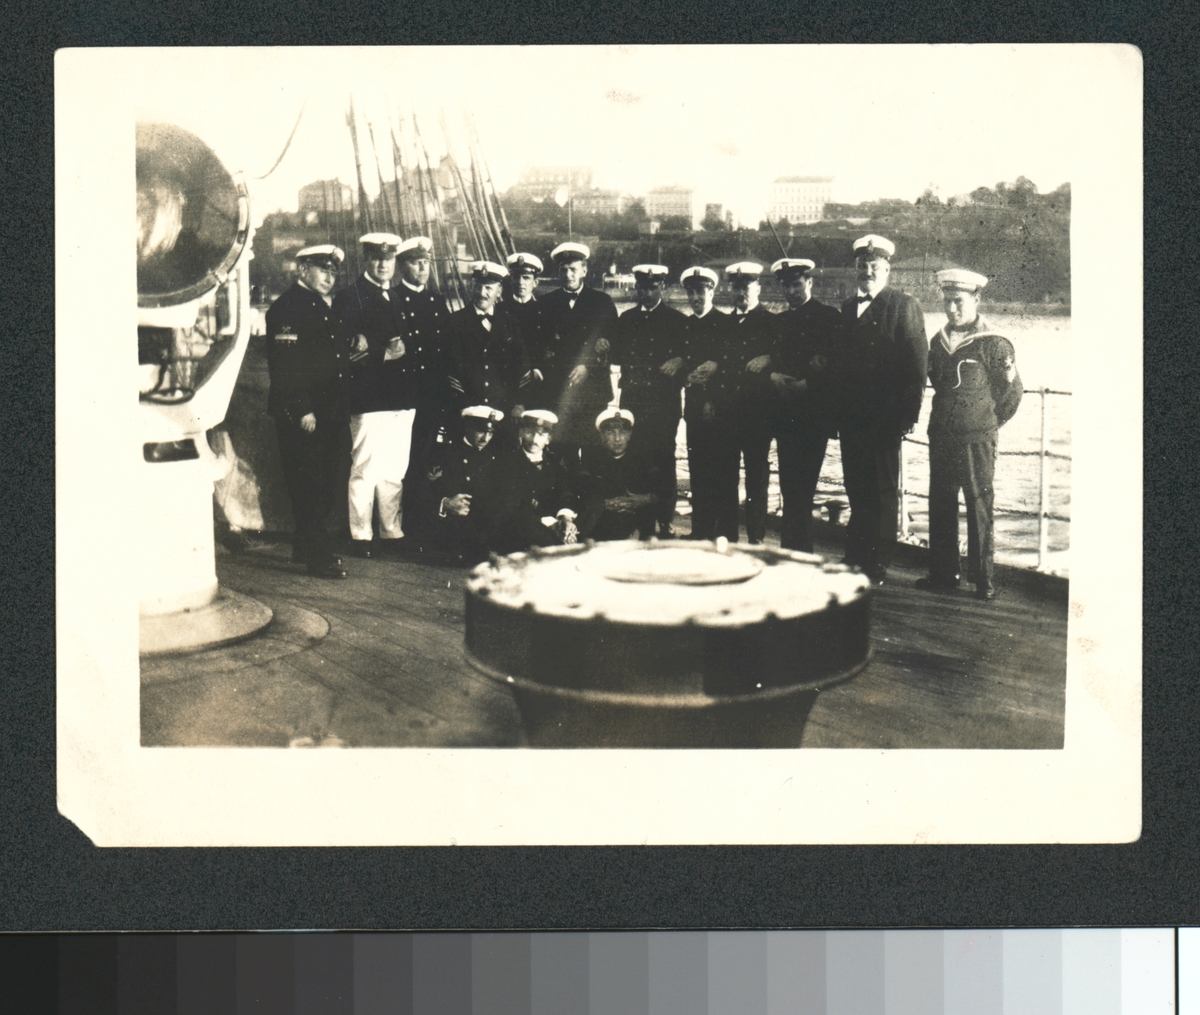 Gruppfoto av svenska flottister ombord på ett fartyg.